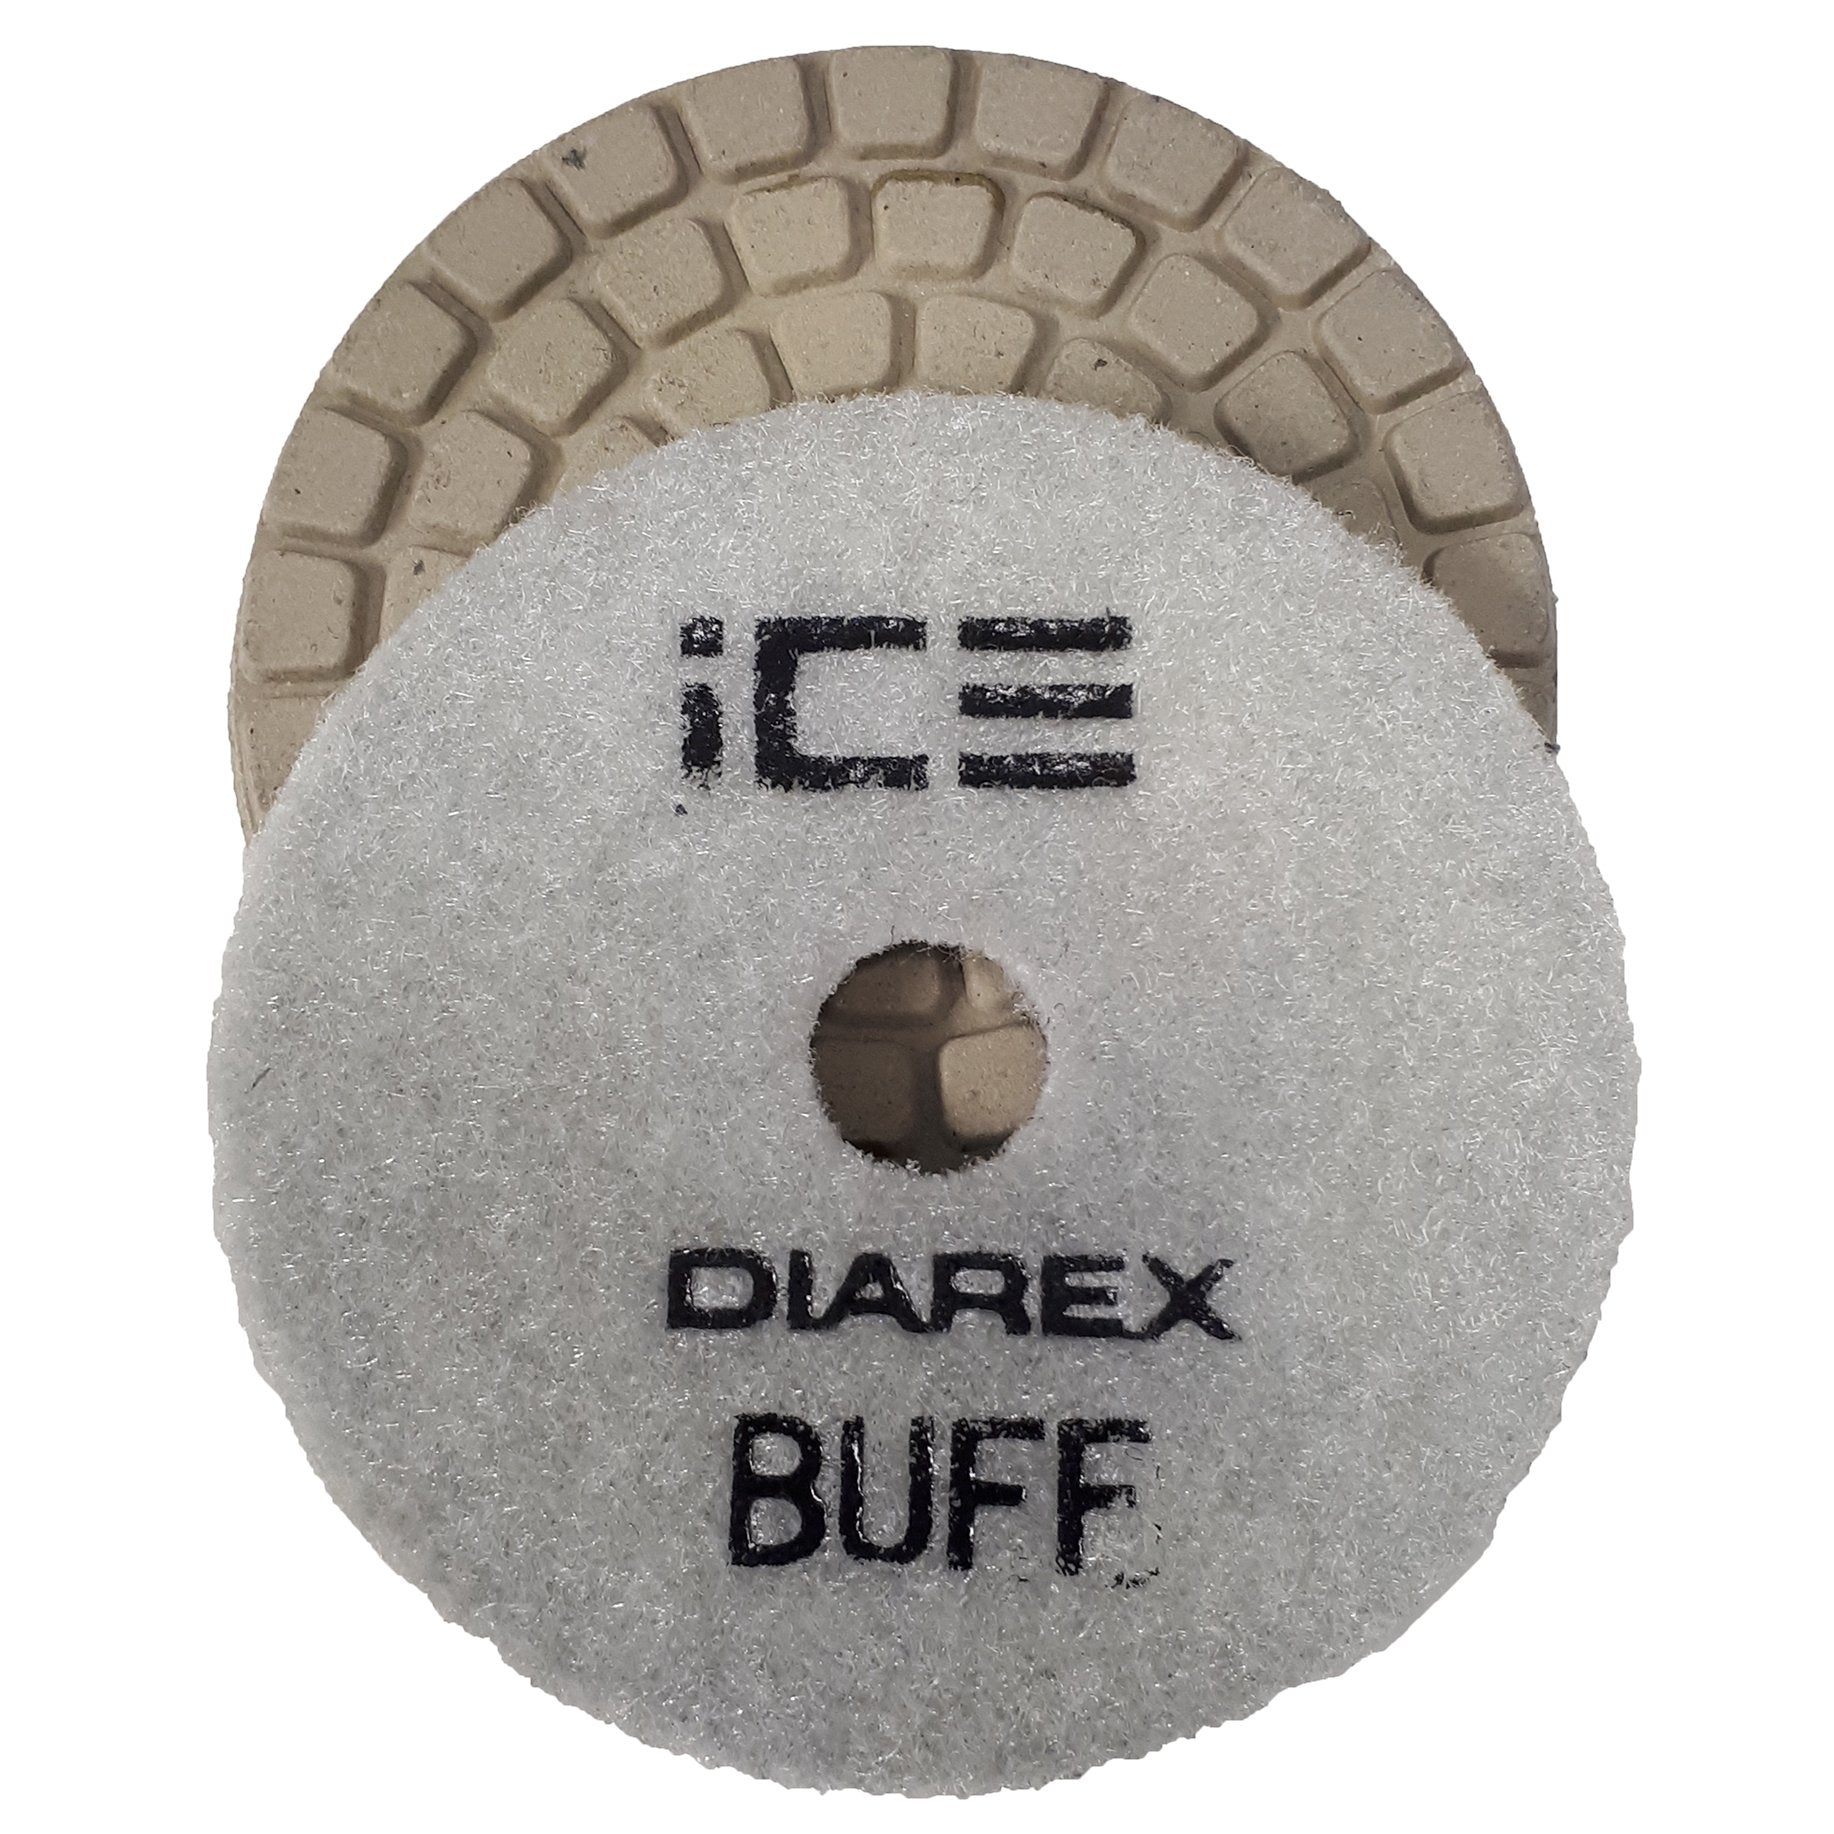 DIAREX "ICE" POLISHING PADS